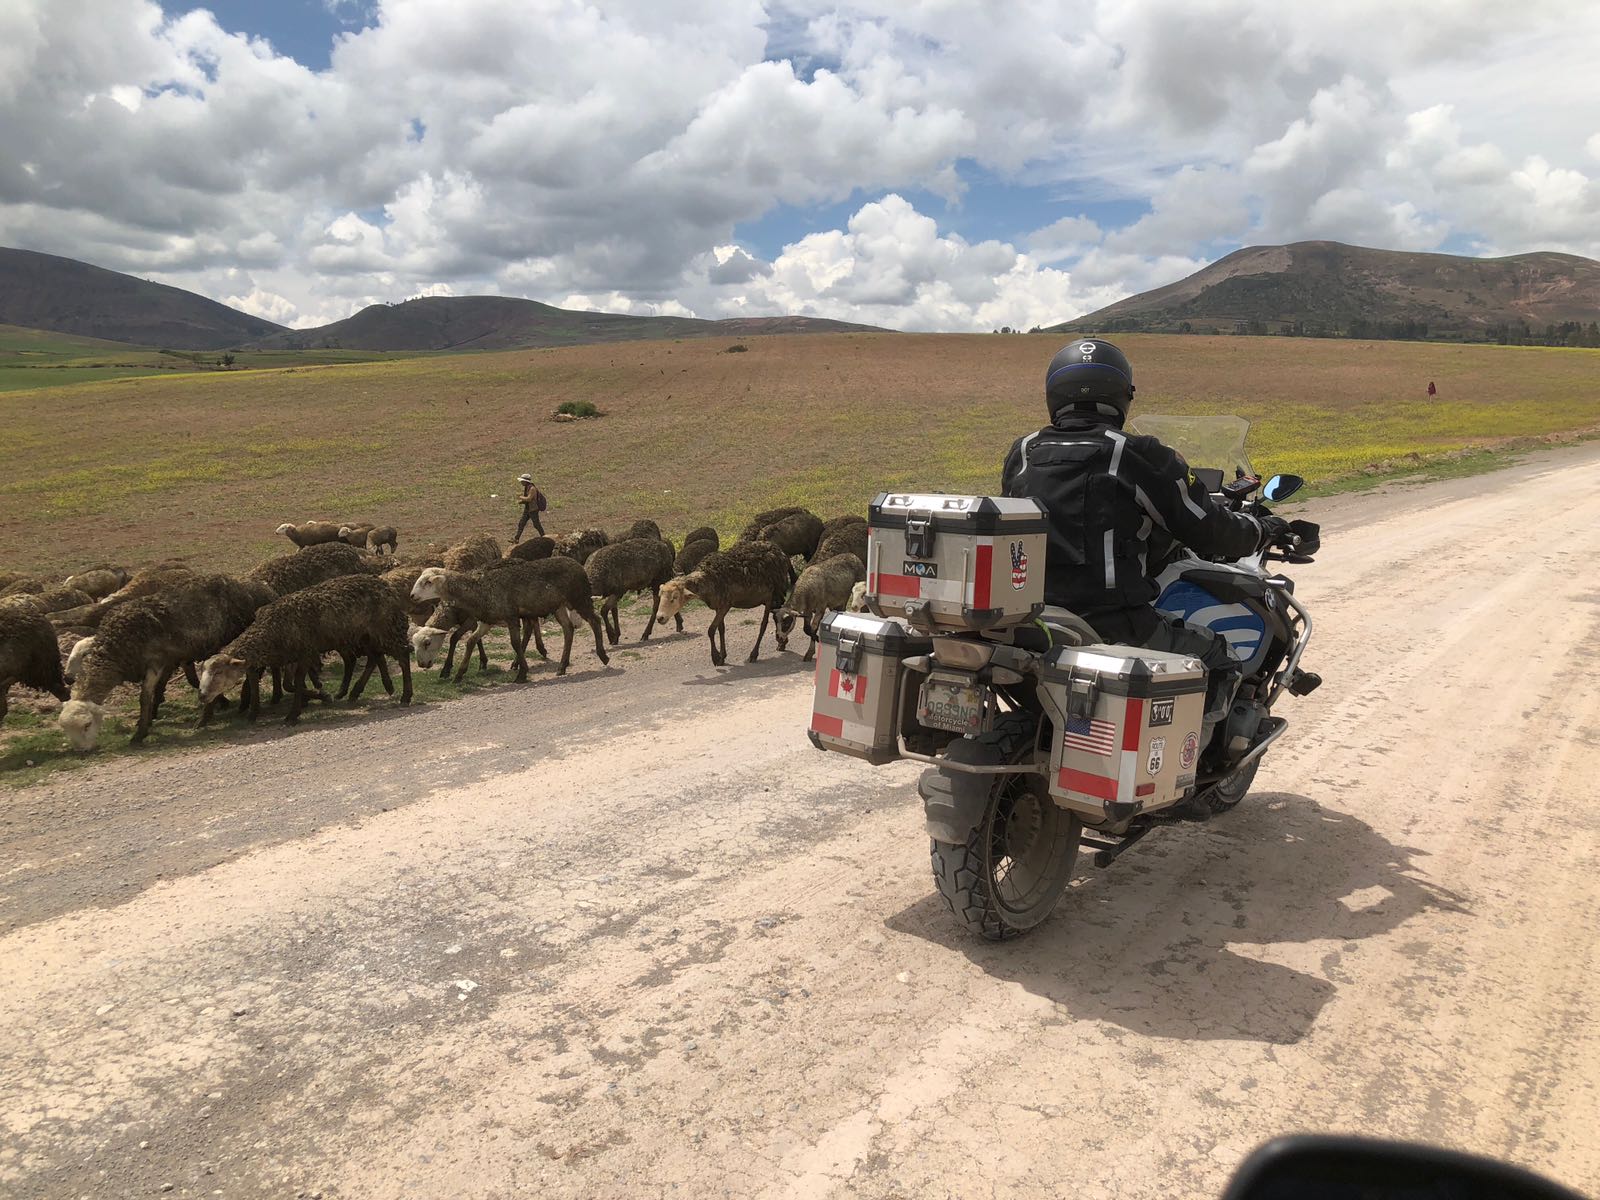 Phil on bike riding past sheep in Peru